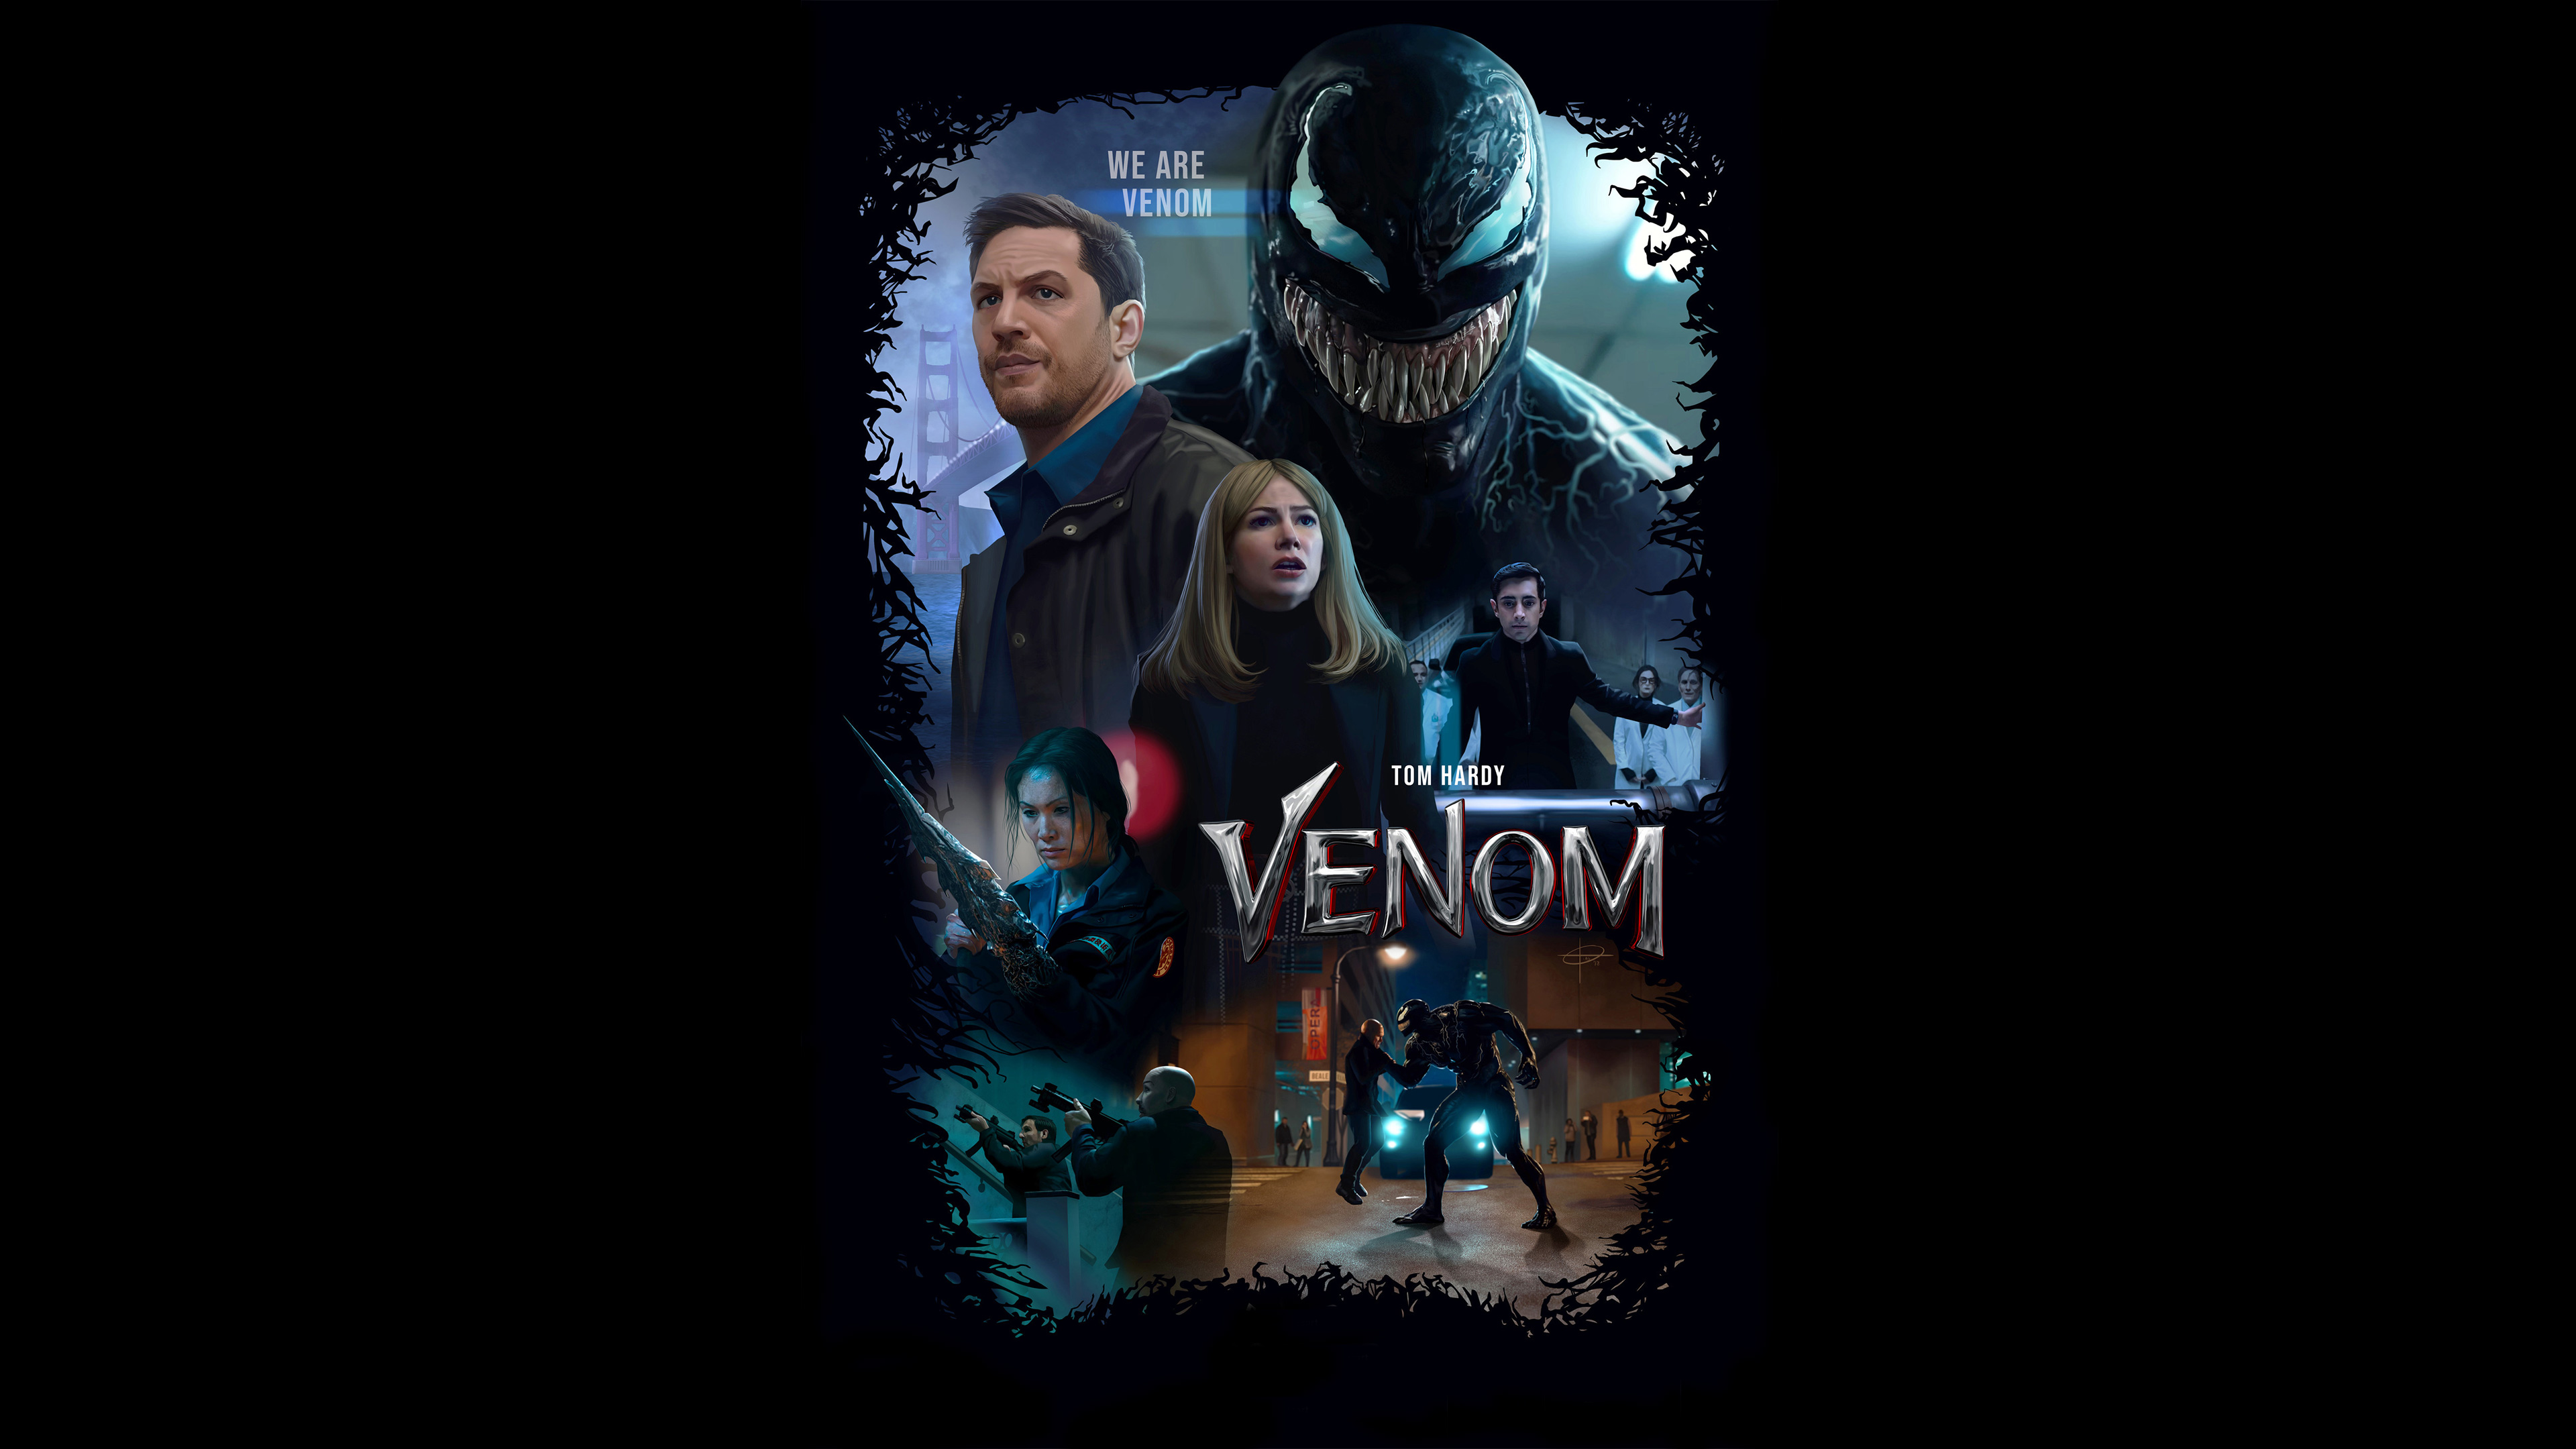 Tom Hardy Venom Movie Poster 2018 Wallpapers